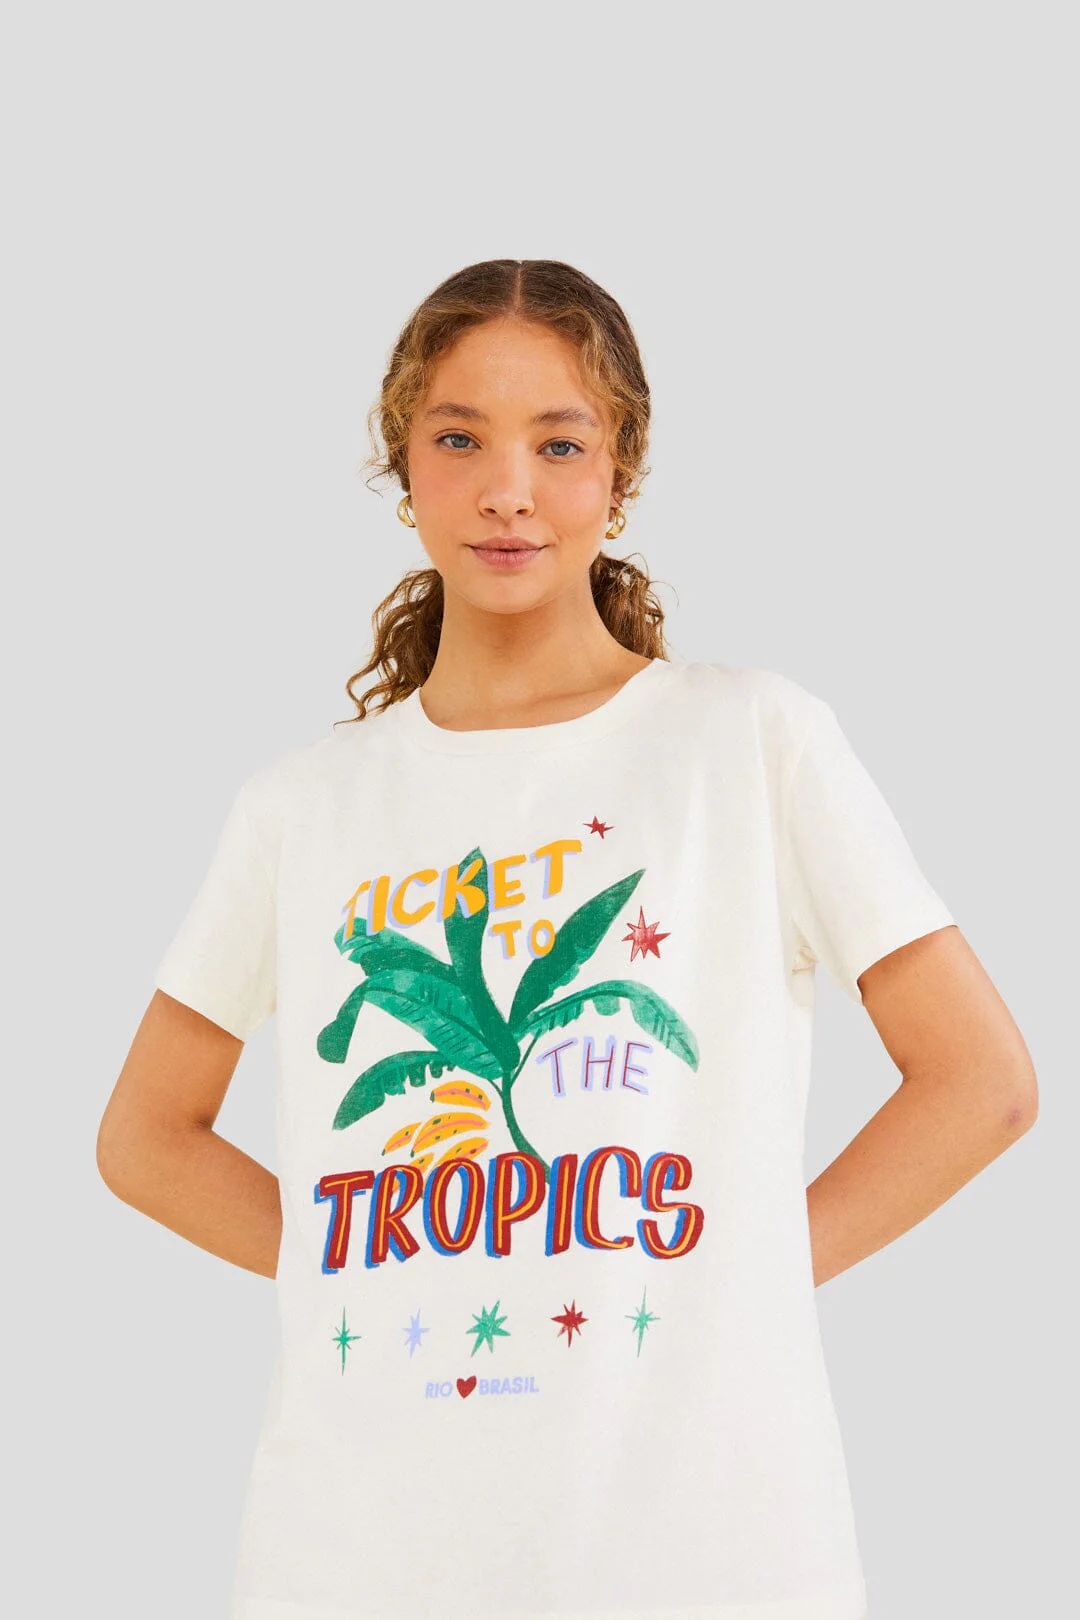 Ticket To The Tropics Organic Cotton T-Shirt | FarmRio